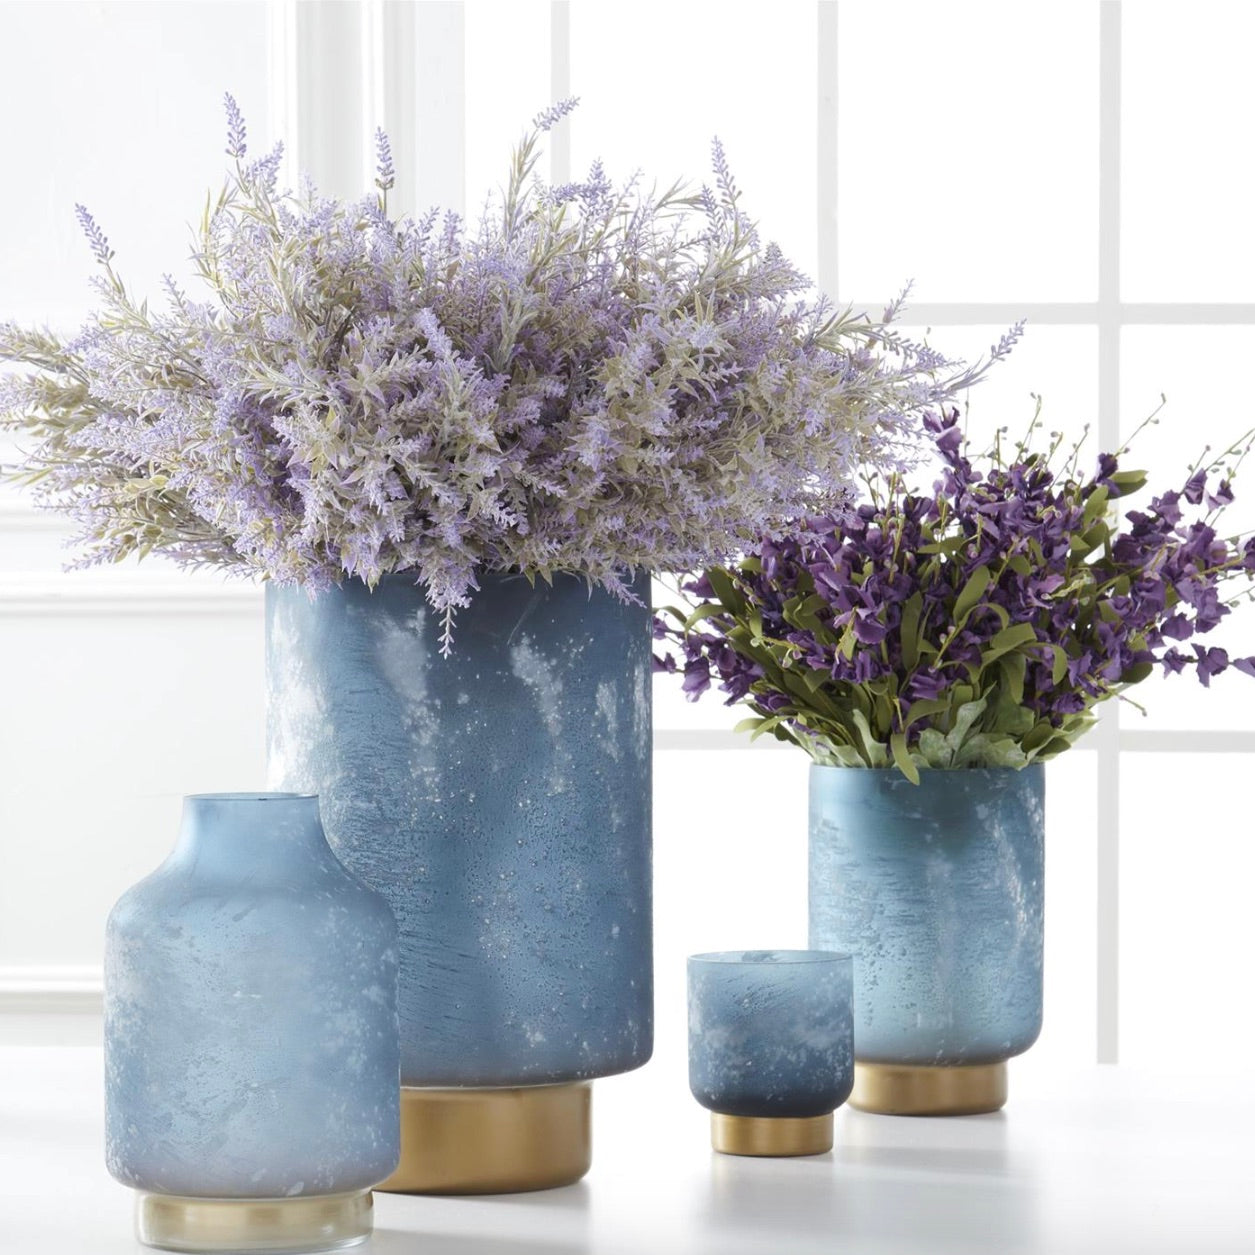 Set/3 Frosted Blue Glass Vases